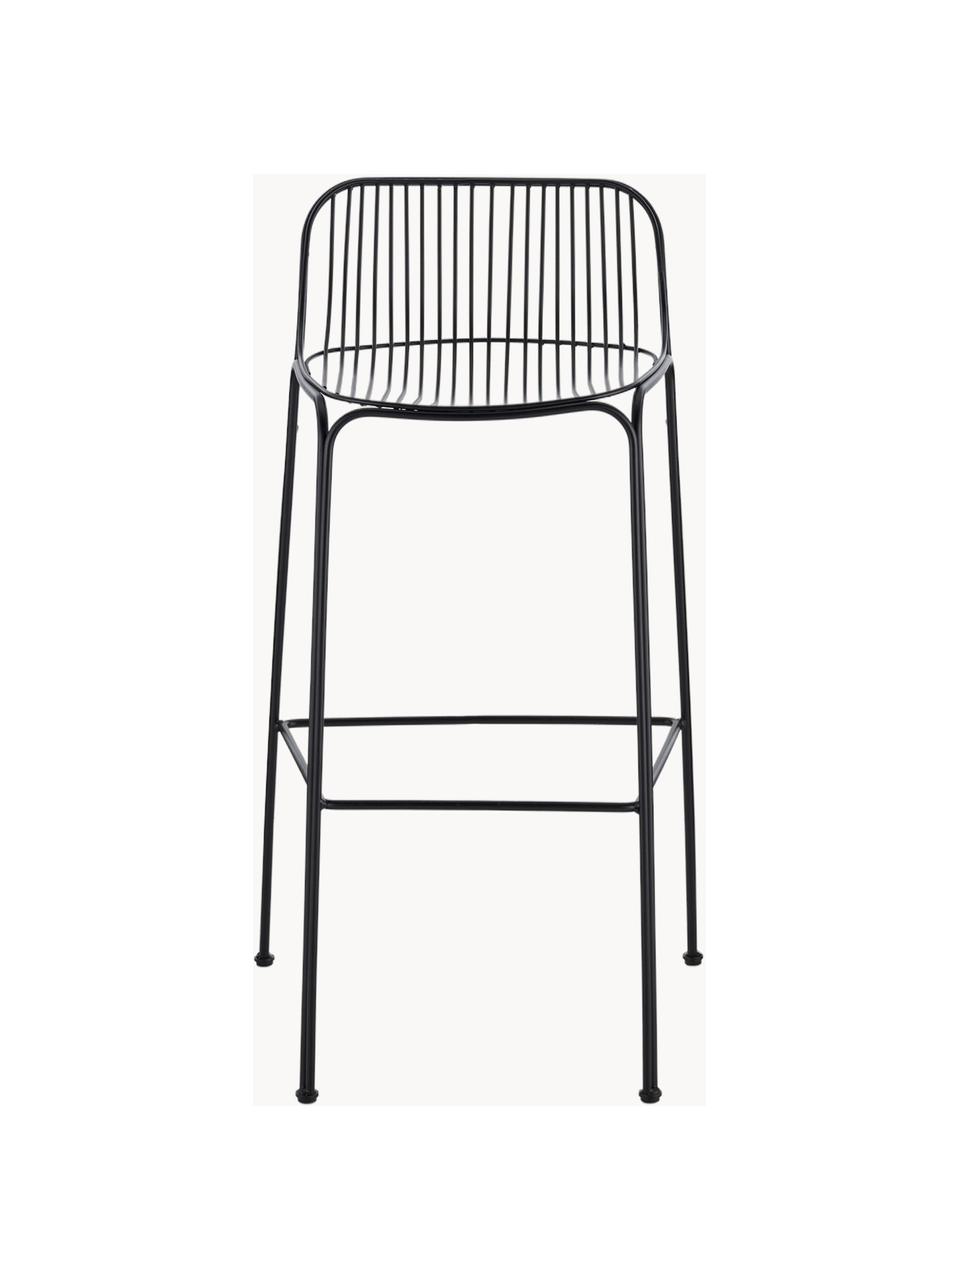 Zahradní barová židle Hiray, Pozinkovaná lakovaná ocel, Černá, Š 57 cm, V 96 cm